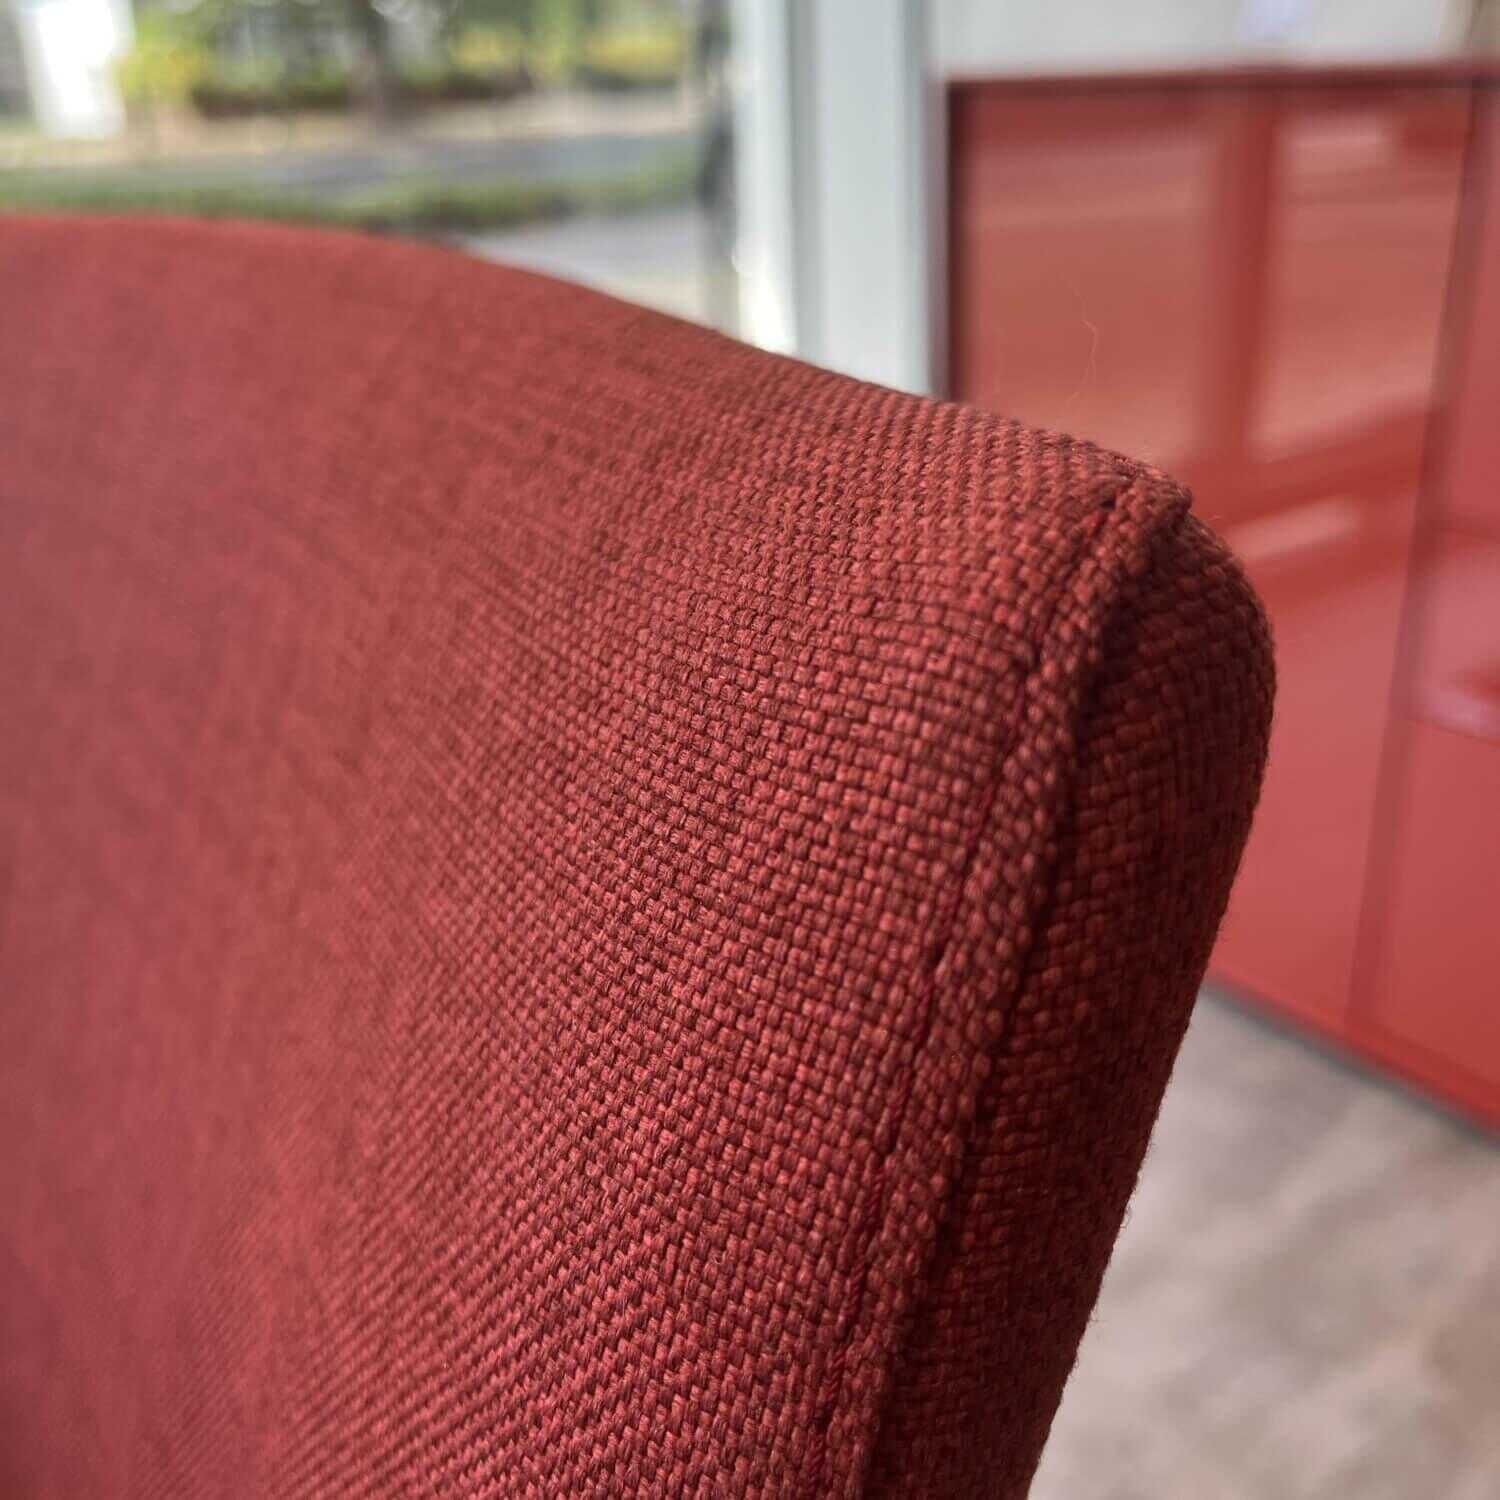 Saragossa 4-Fuß Stuhl 8226 Bezug Stoff Varese Scarlet Rot Gestell Vierkant Metall Schwarz